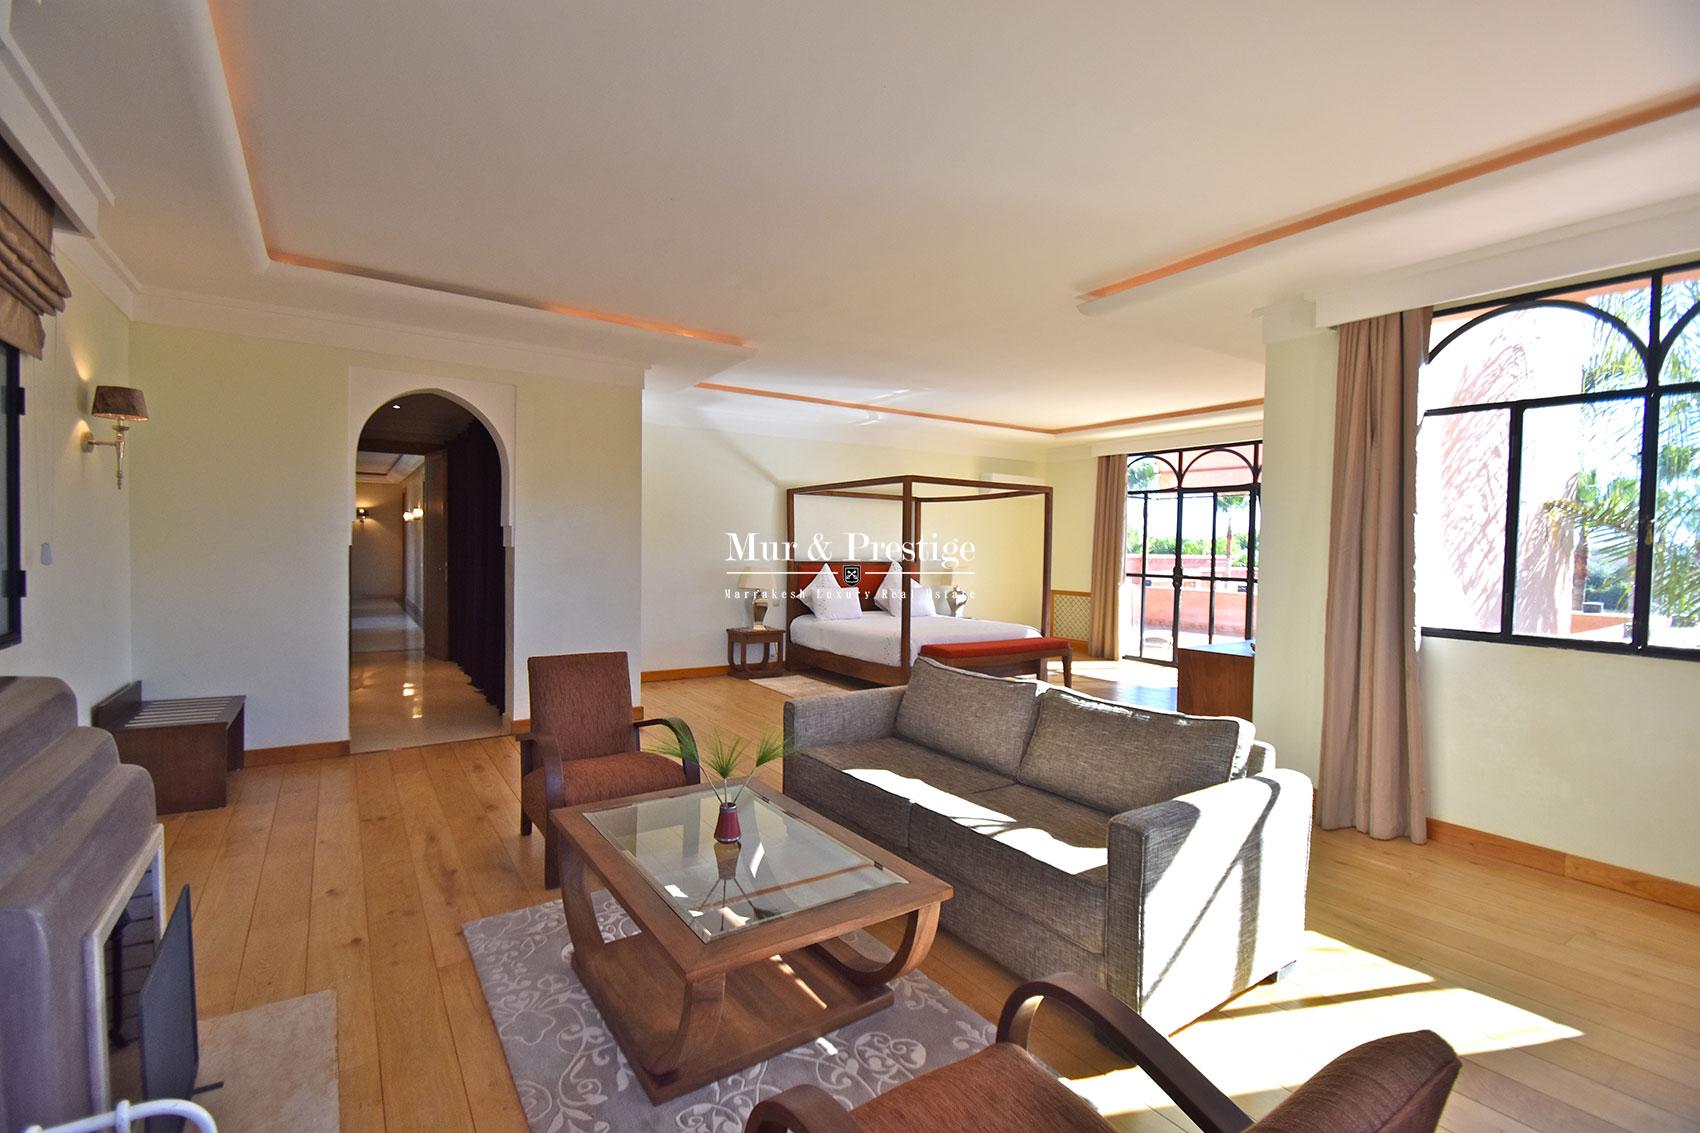 Immobilier de luxe a Marrakech 